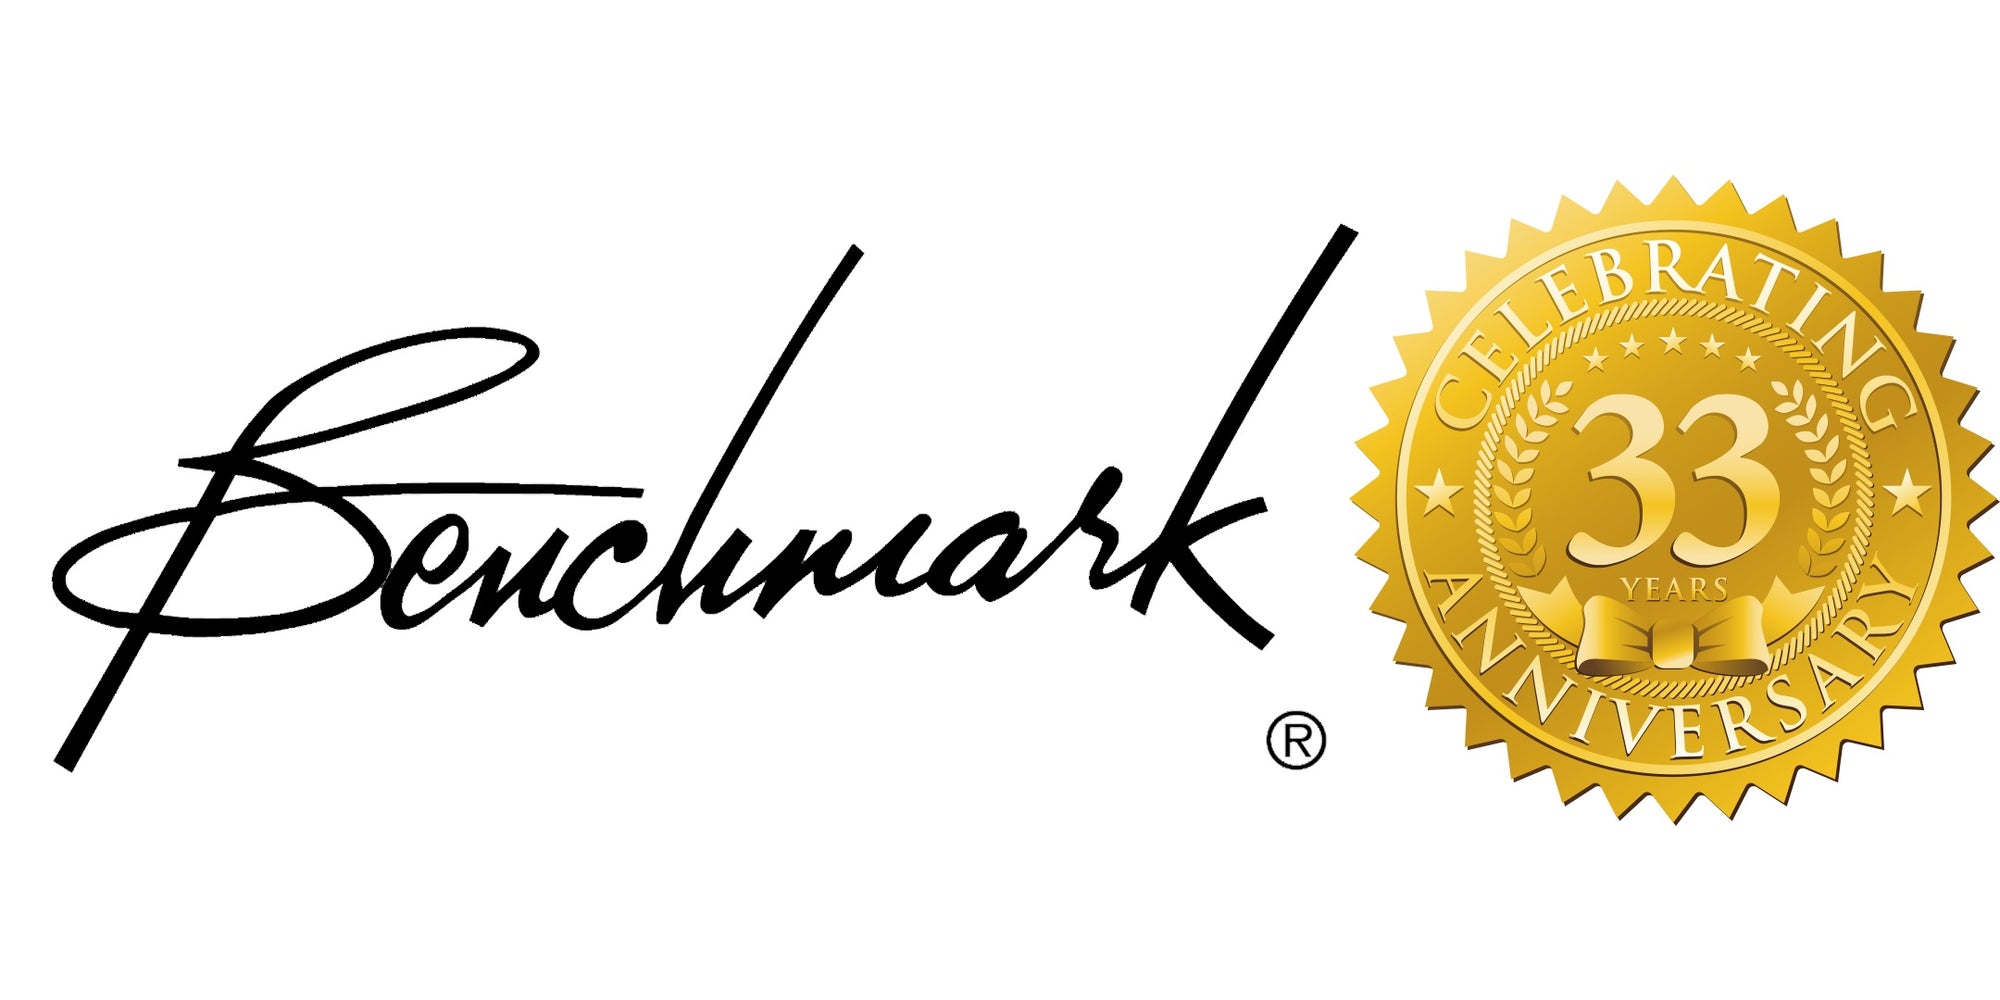 Benchmark Celebrates 33 Years - March 2016